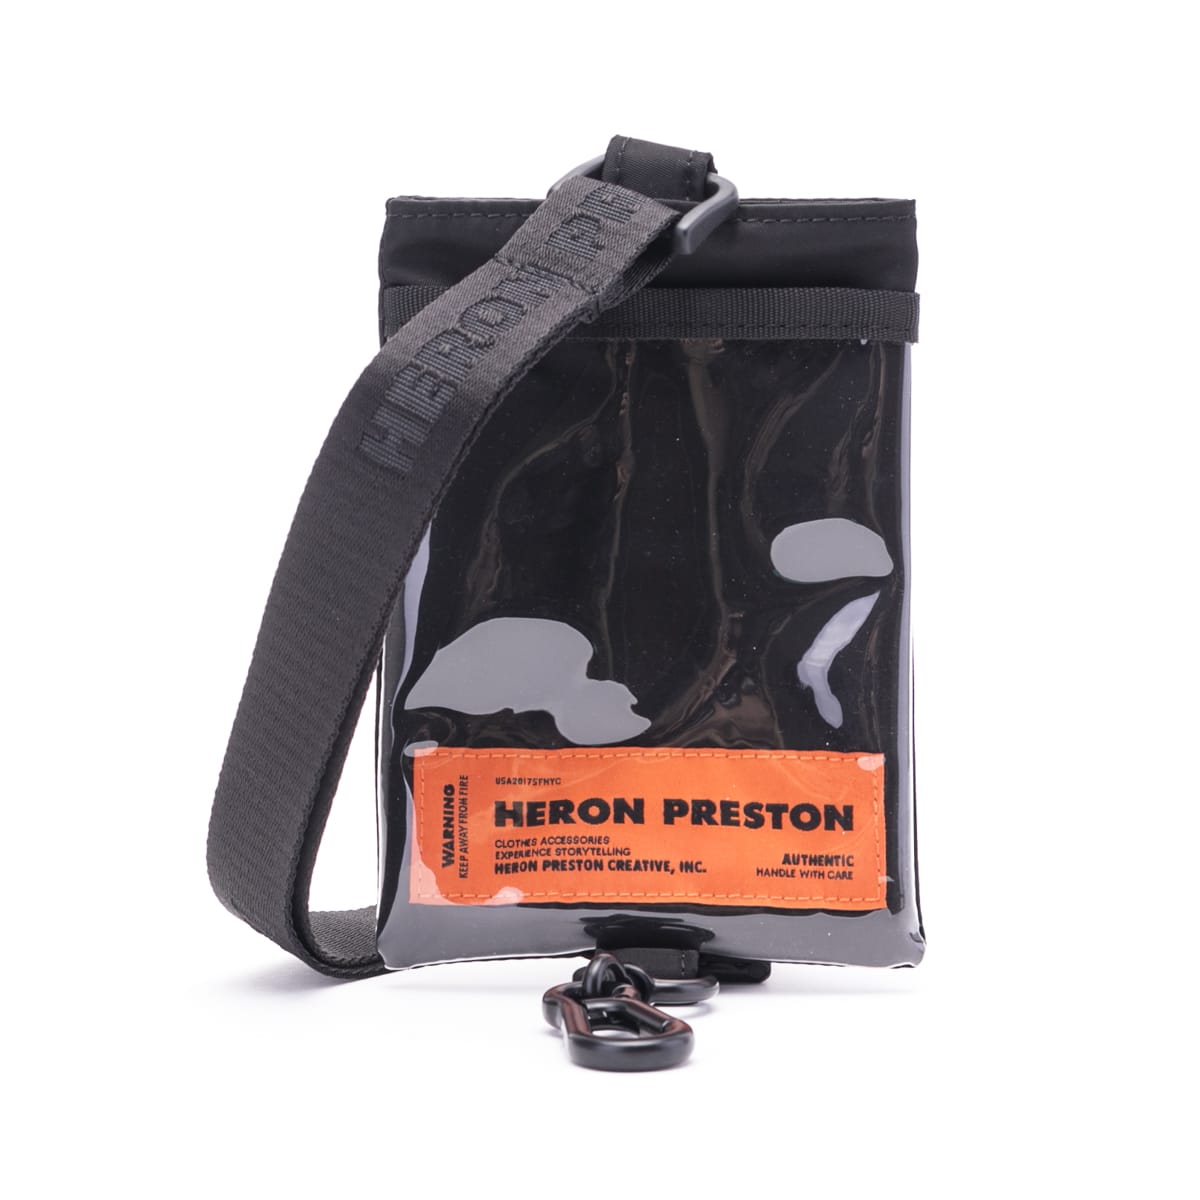 Heron Preston Passport Holder Heron Preston